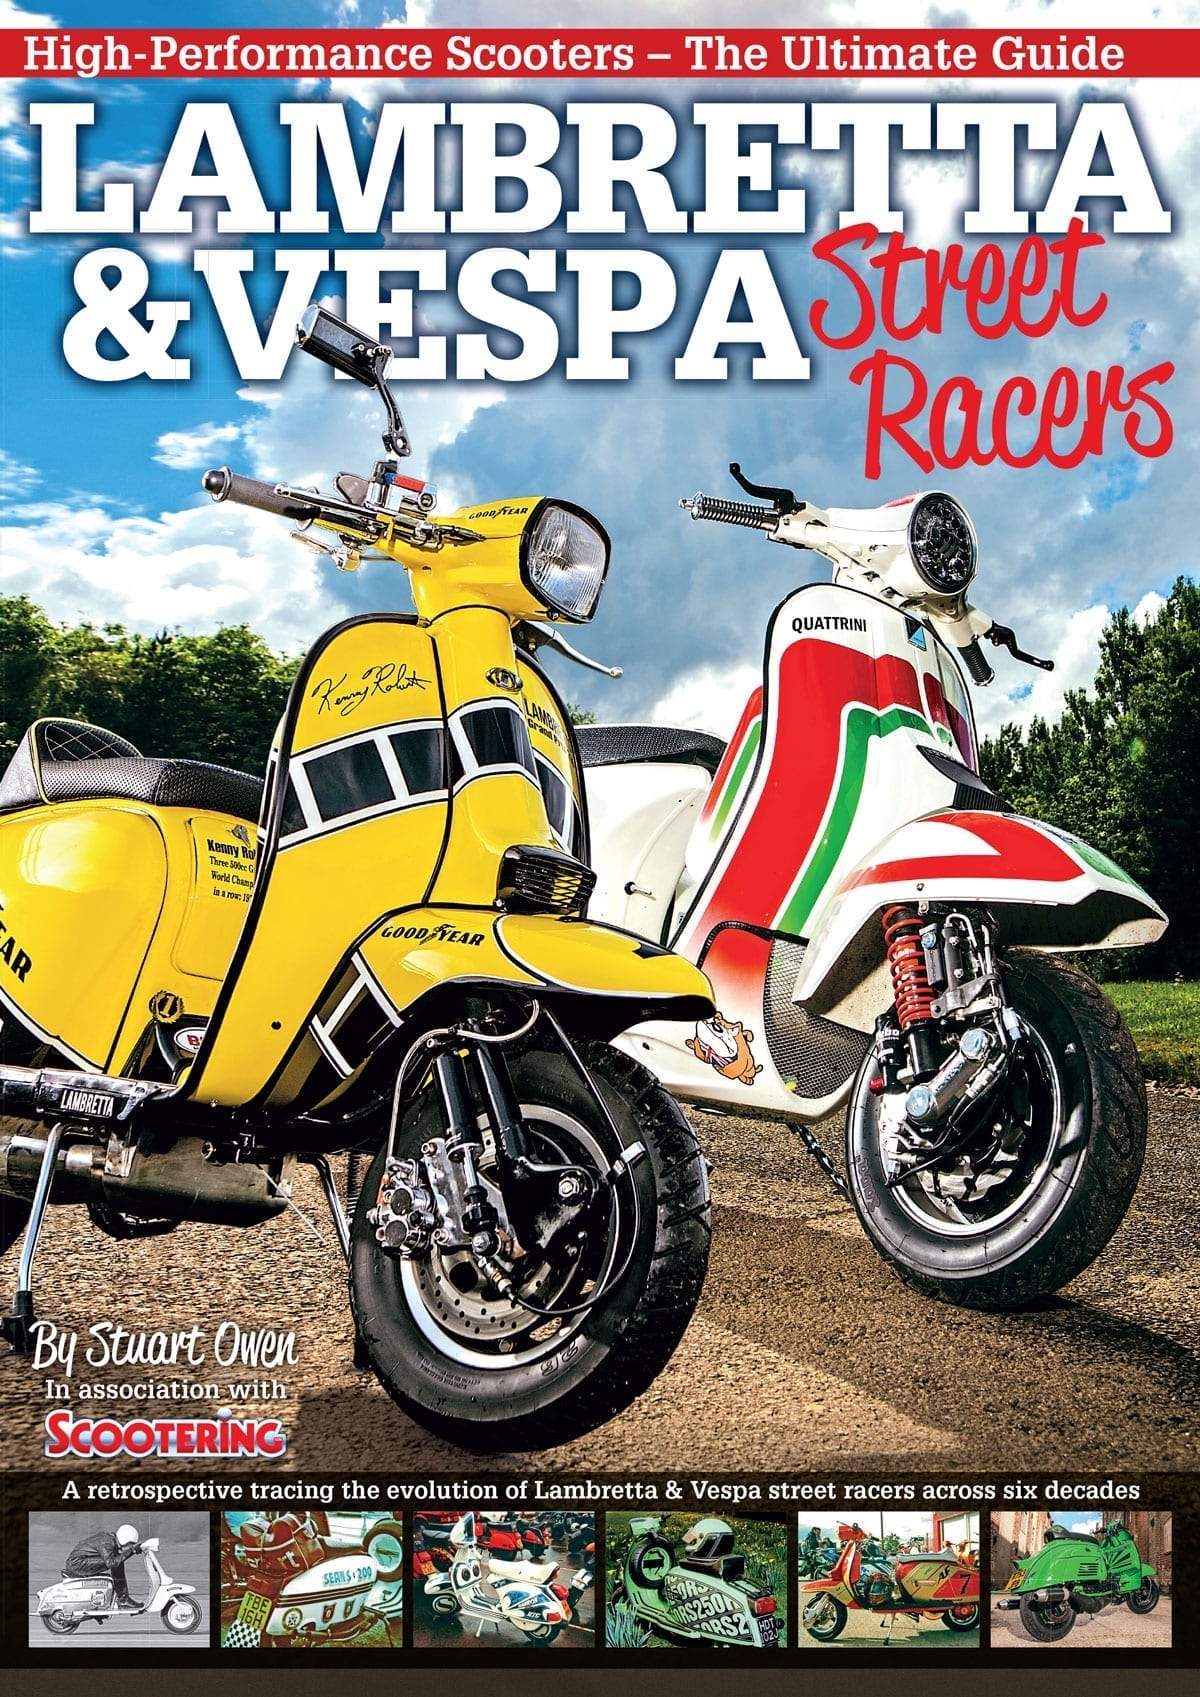 Lambretta & Vespa Street Racers